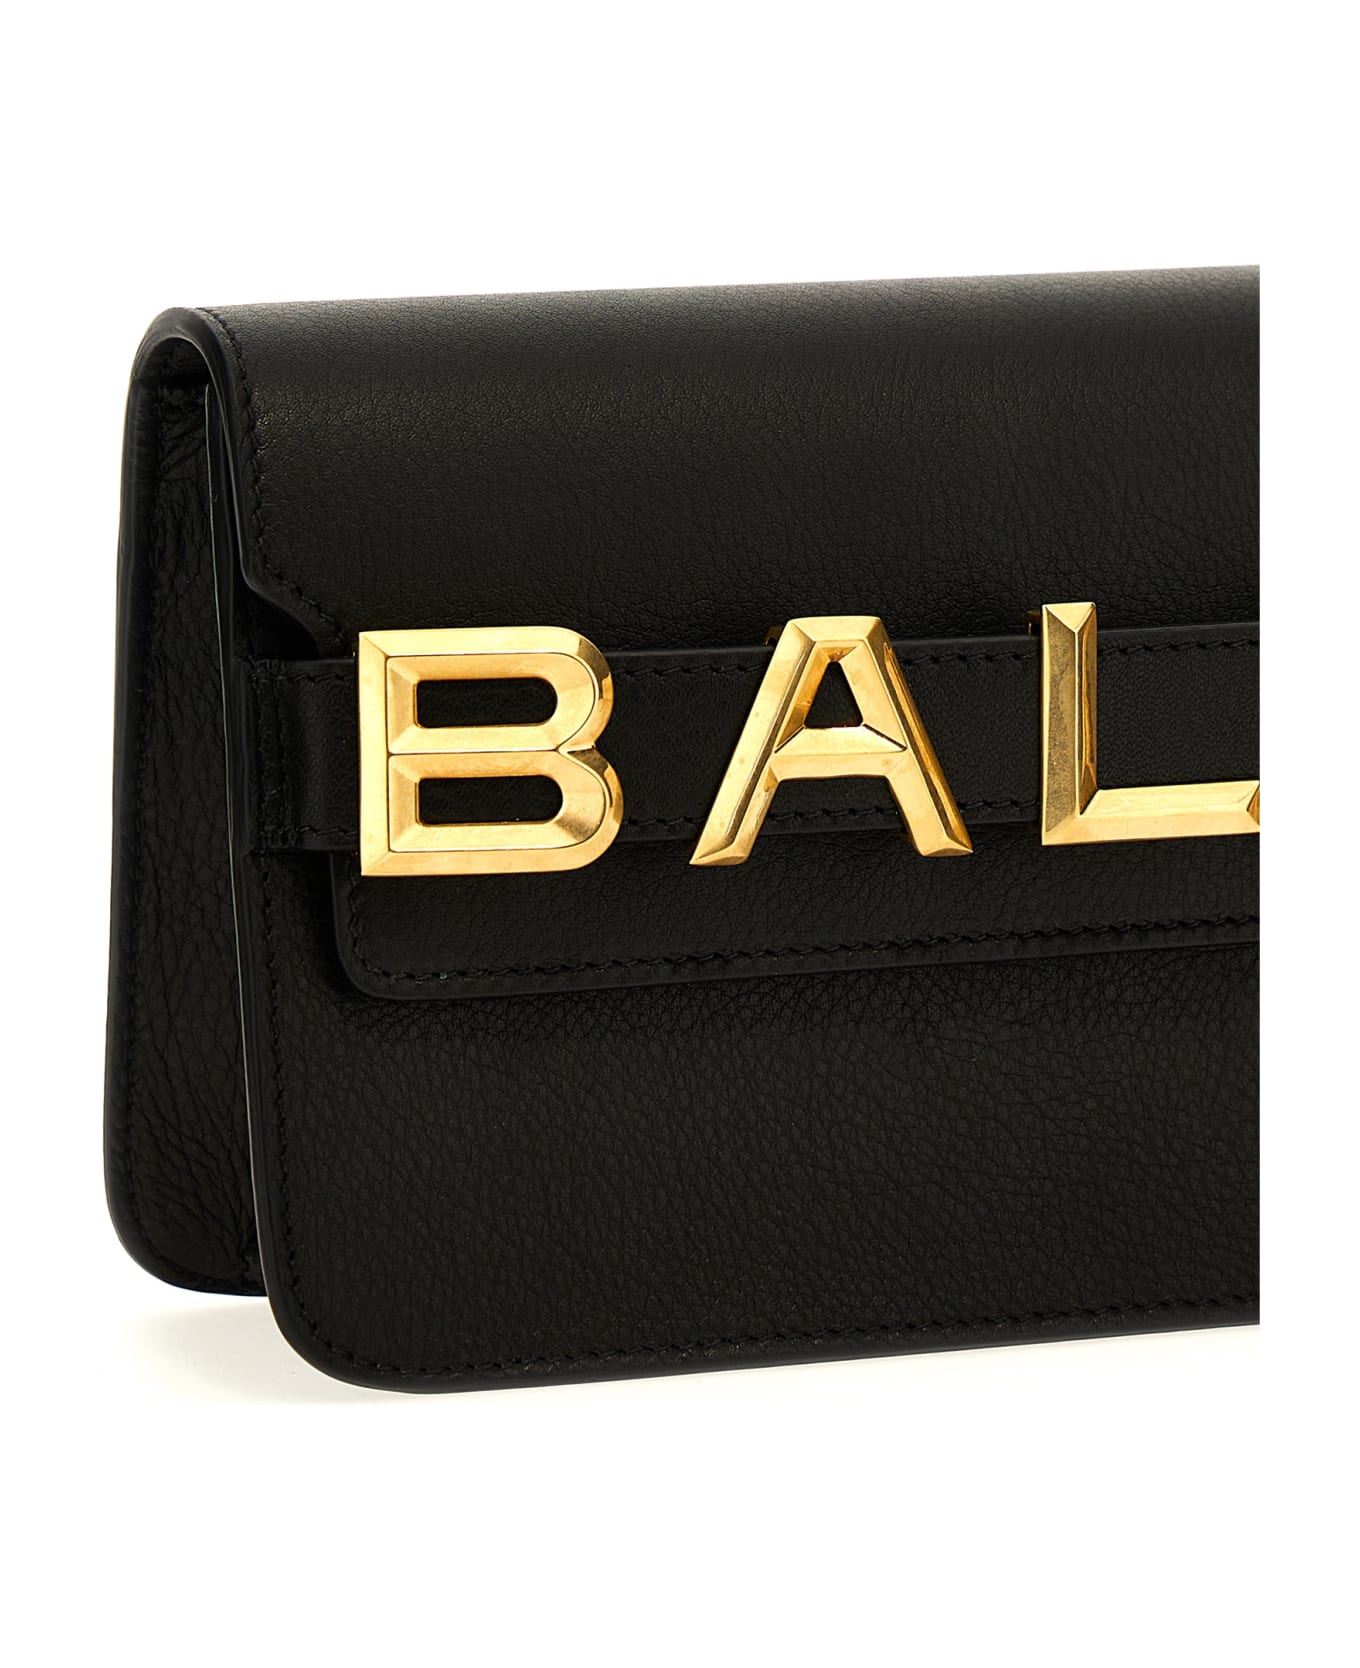 Bally Logo Crossbody Bag - Nero/oro クラッチバッグ